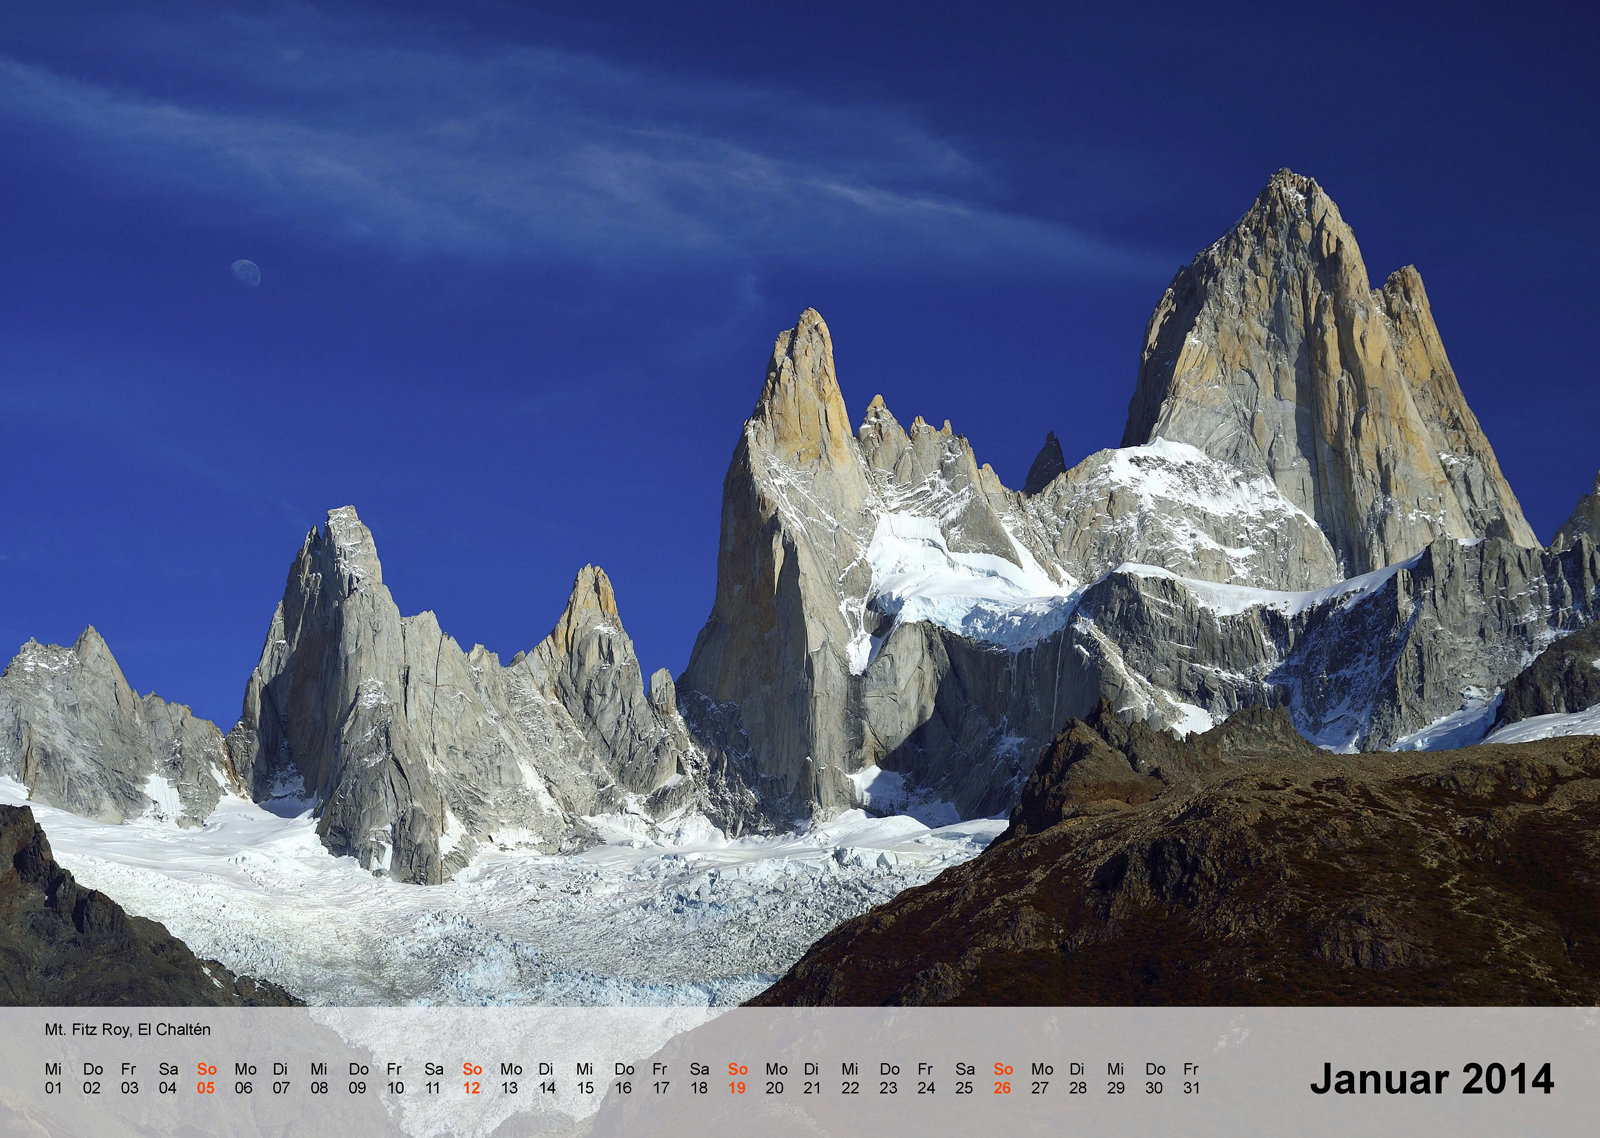 Mt. Fitz Roy | El Chaltén | Argentinien | Kalender 2014 - Januar